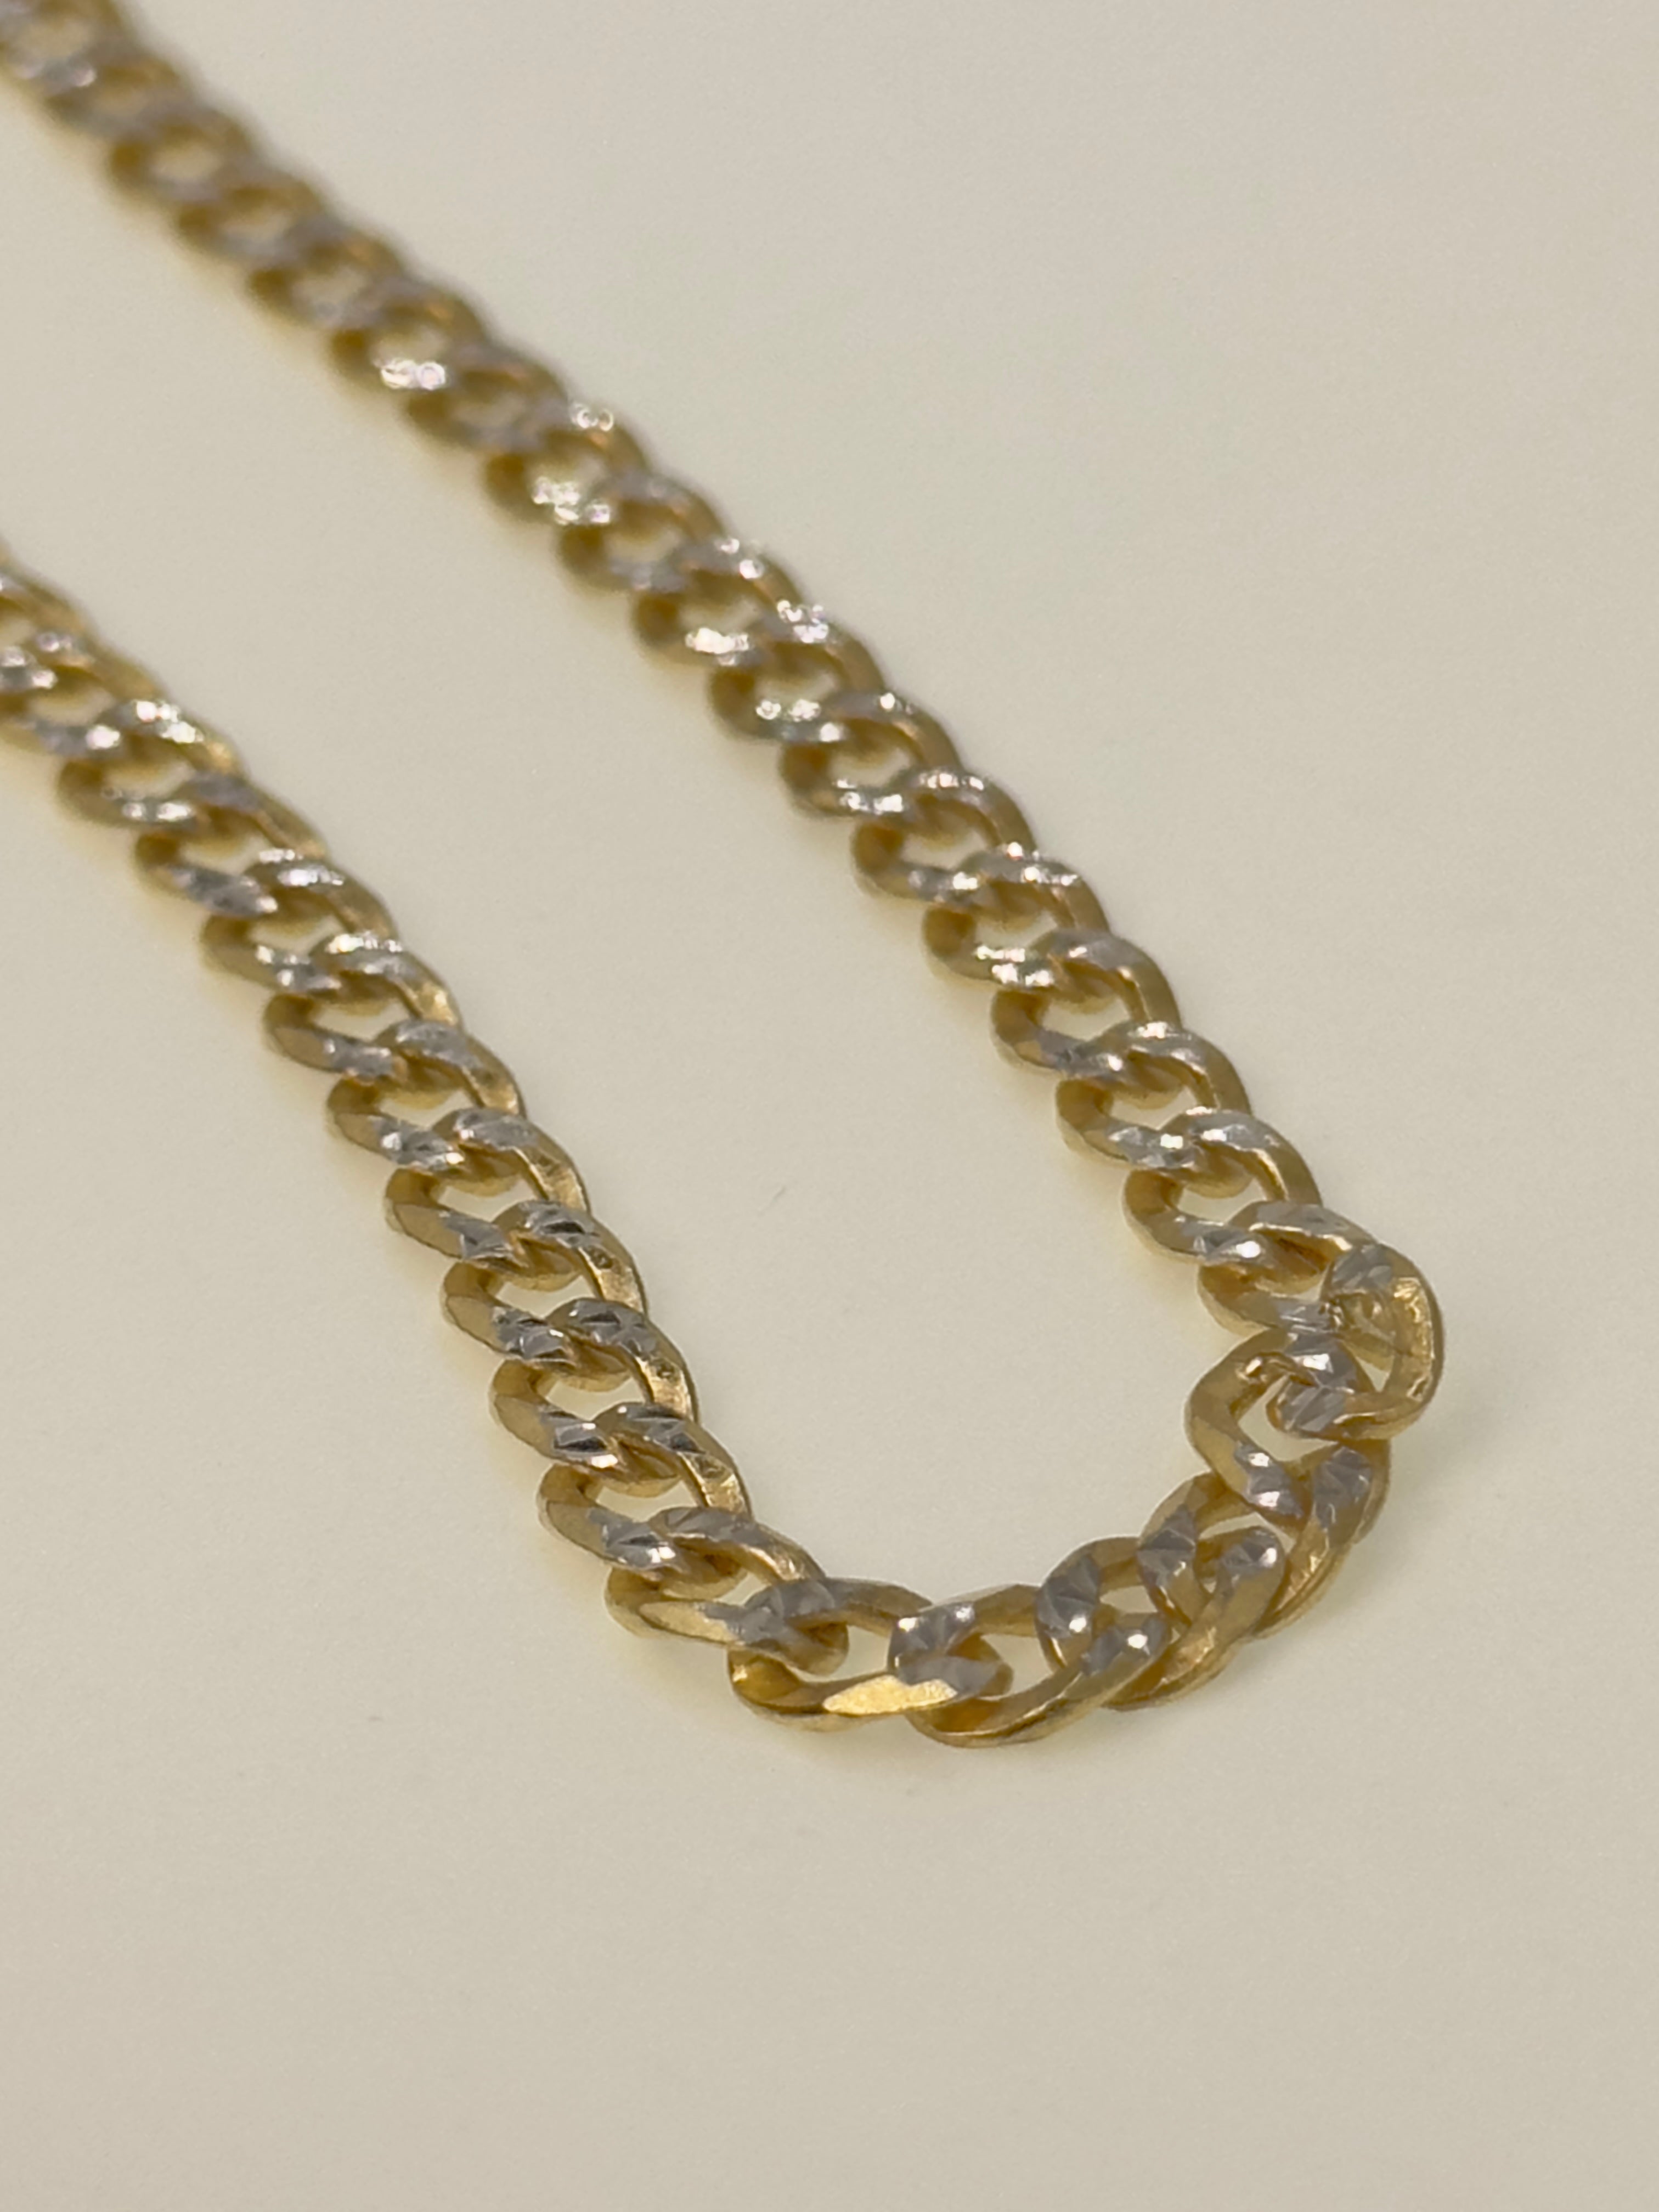 DR1654 - 925 Sterling Silver,14K YG Bonded - Men's Gold Chains - Cuban w/ Diamond Cut